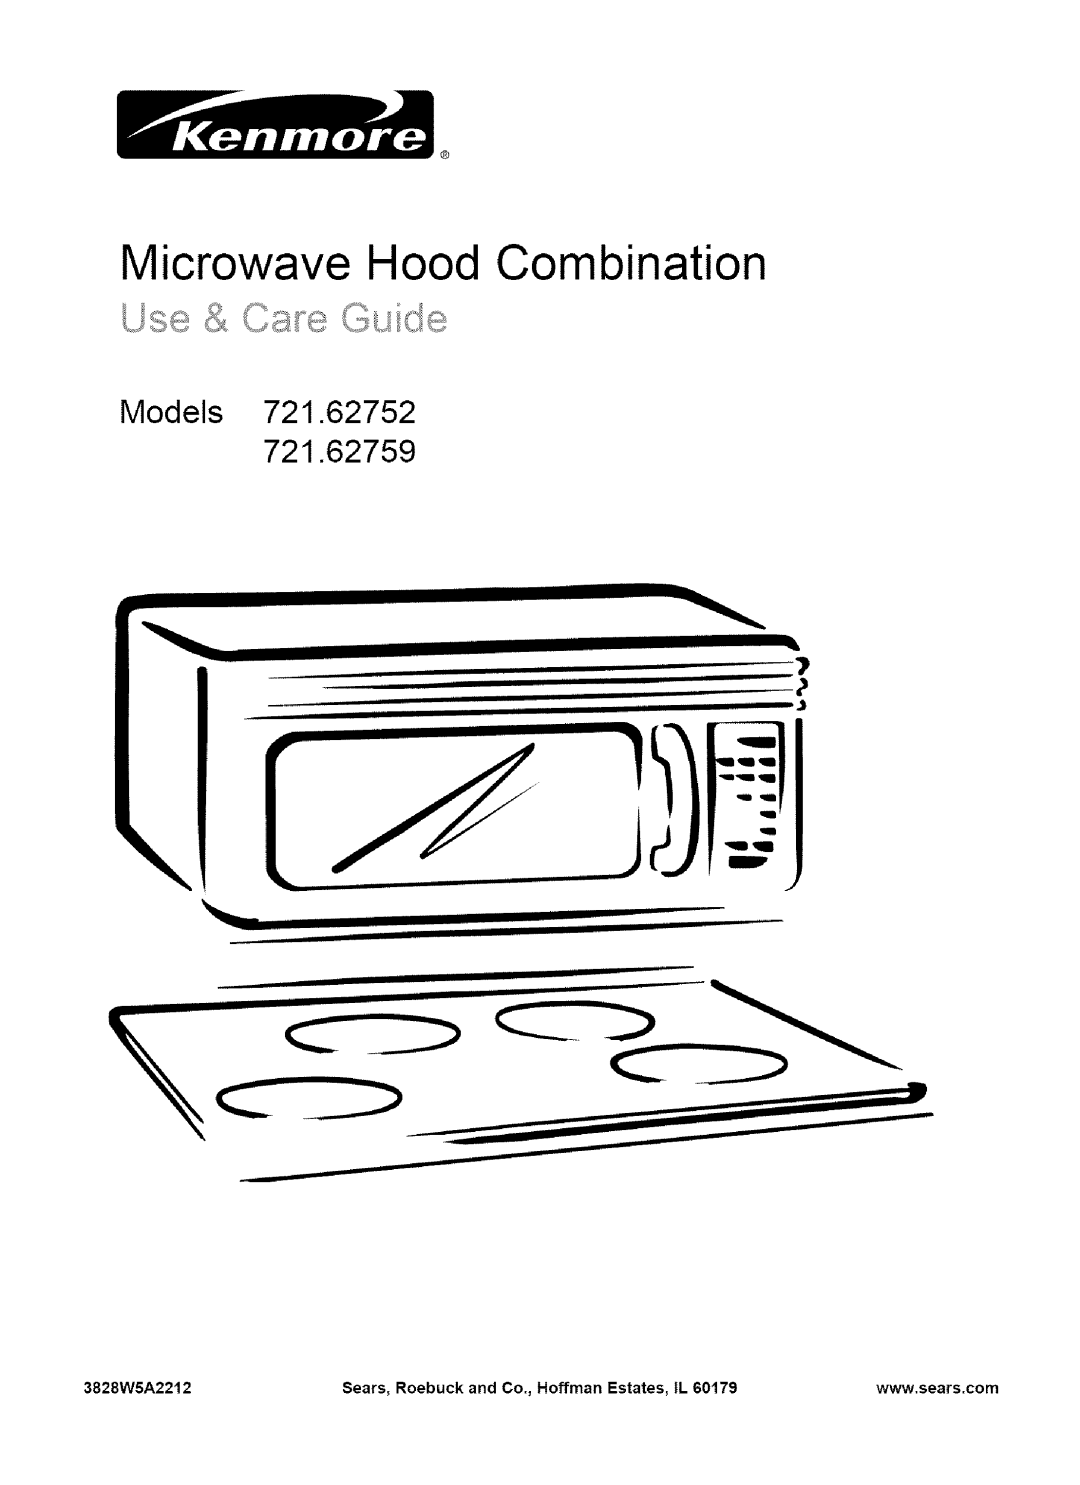 Kenmore 721.62759, 721.62752 manual Models, Microwave Hood Combination 